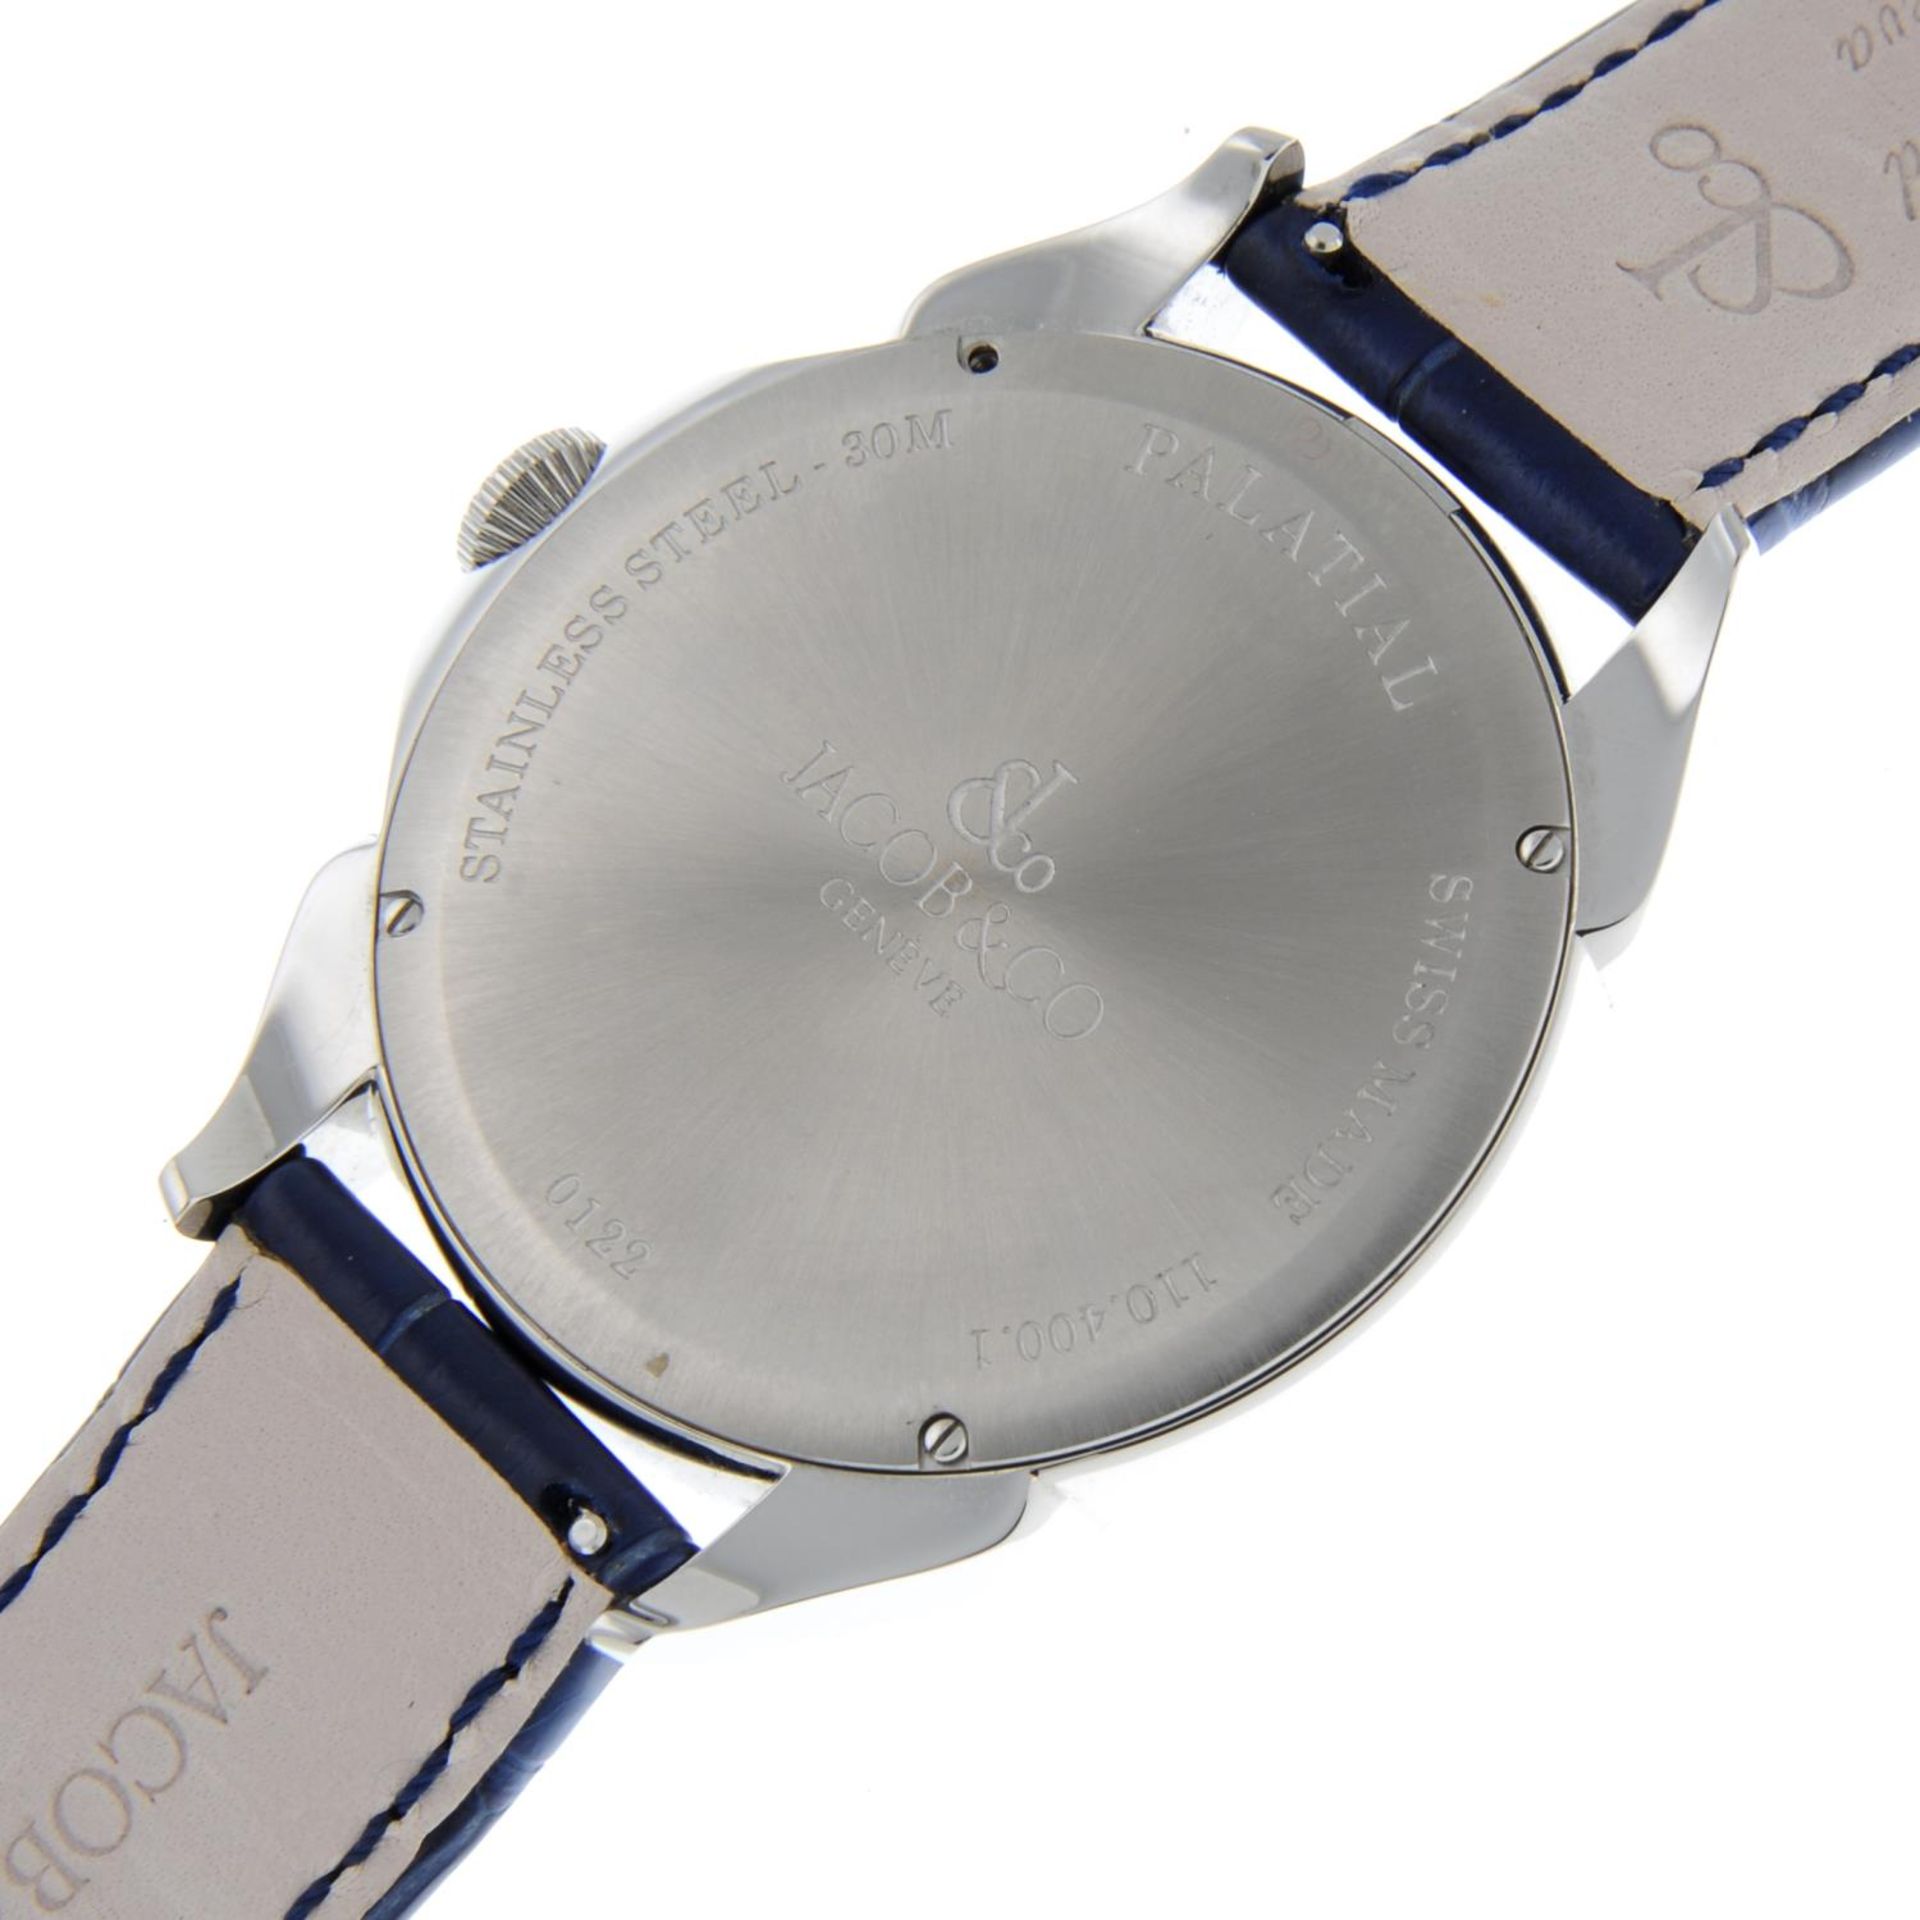 JACOB & CO. - a Palatial Classic Manual Big Date wrist watch. - Image 7 of 7